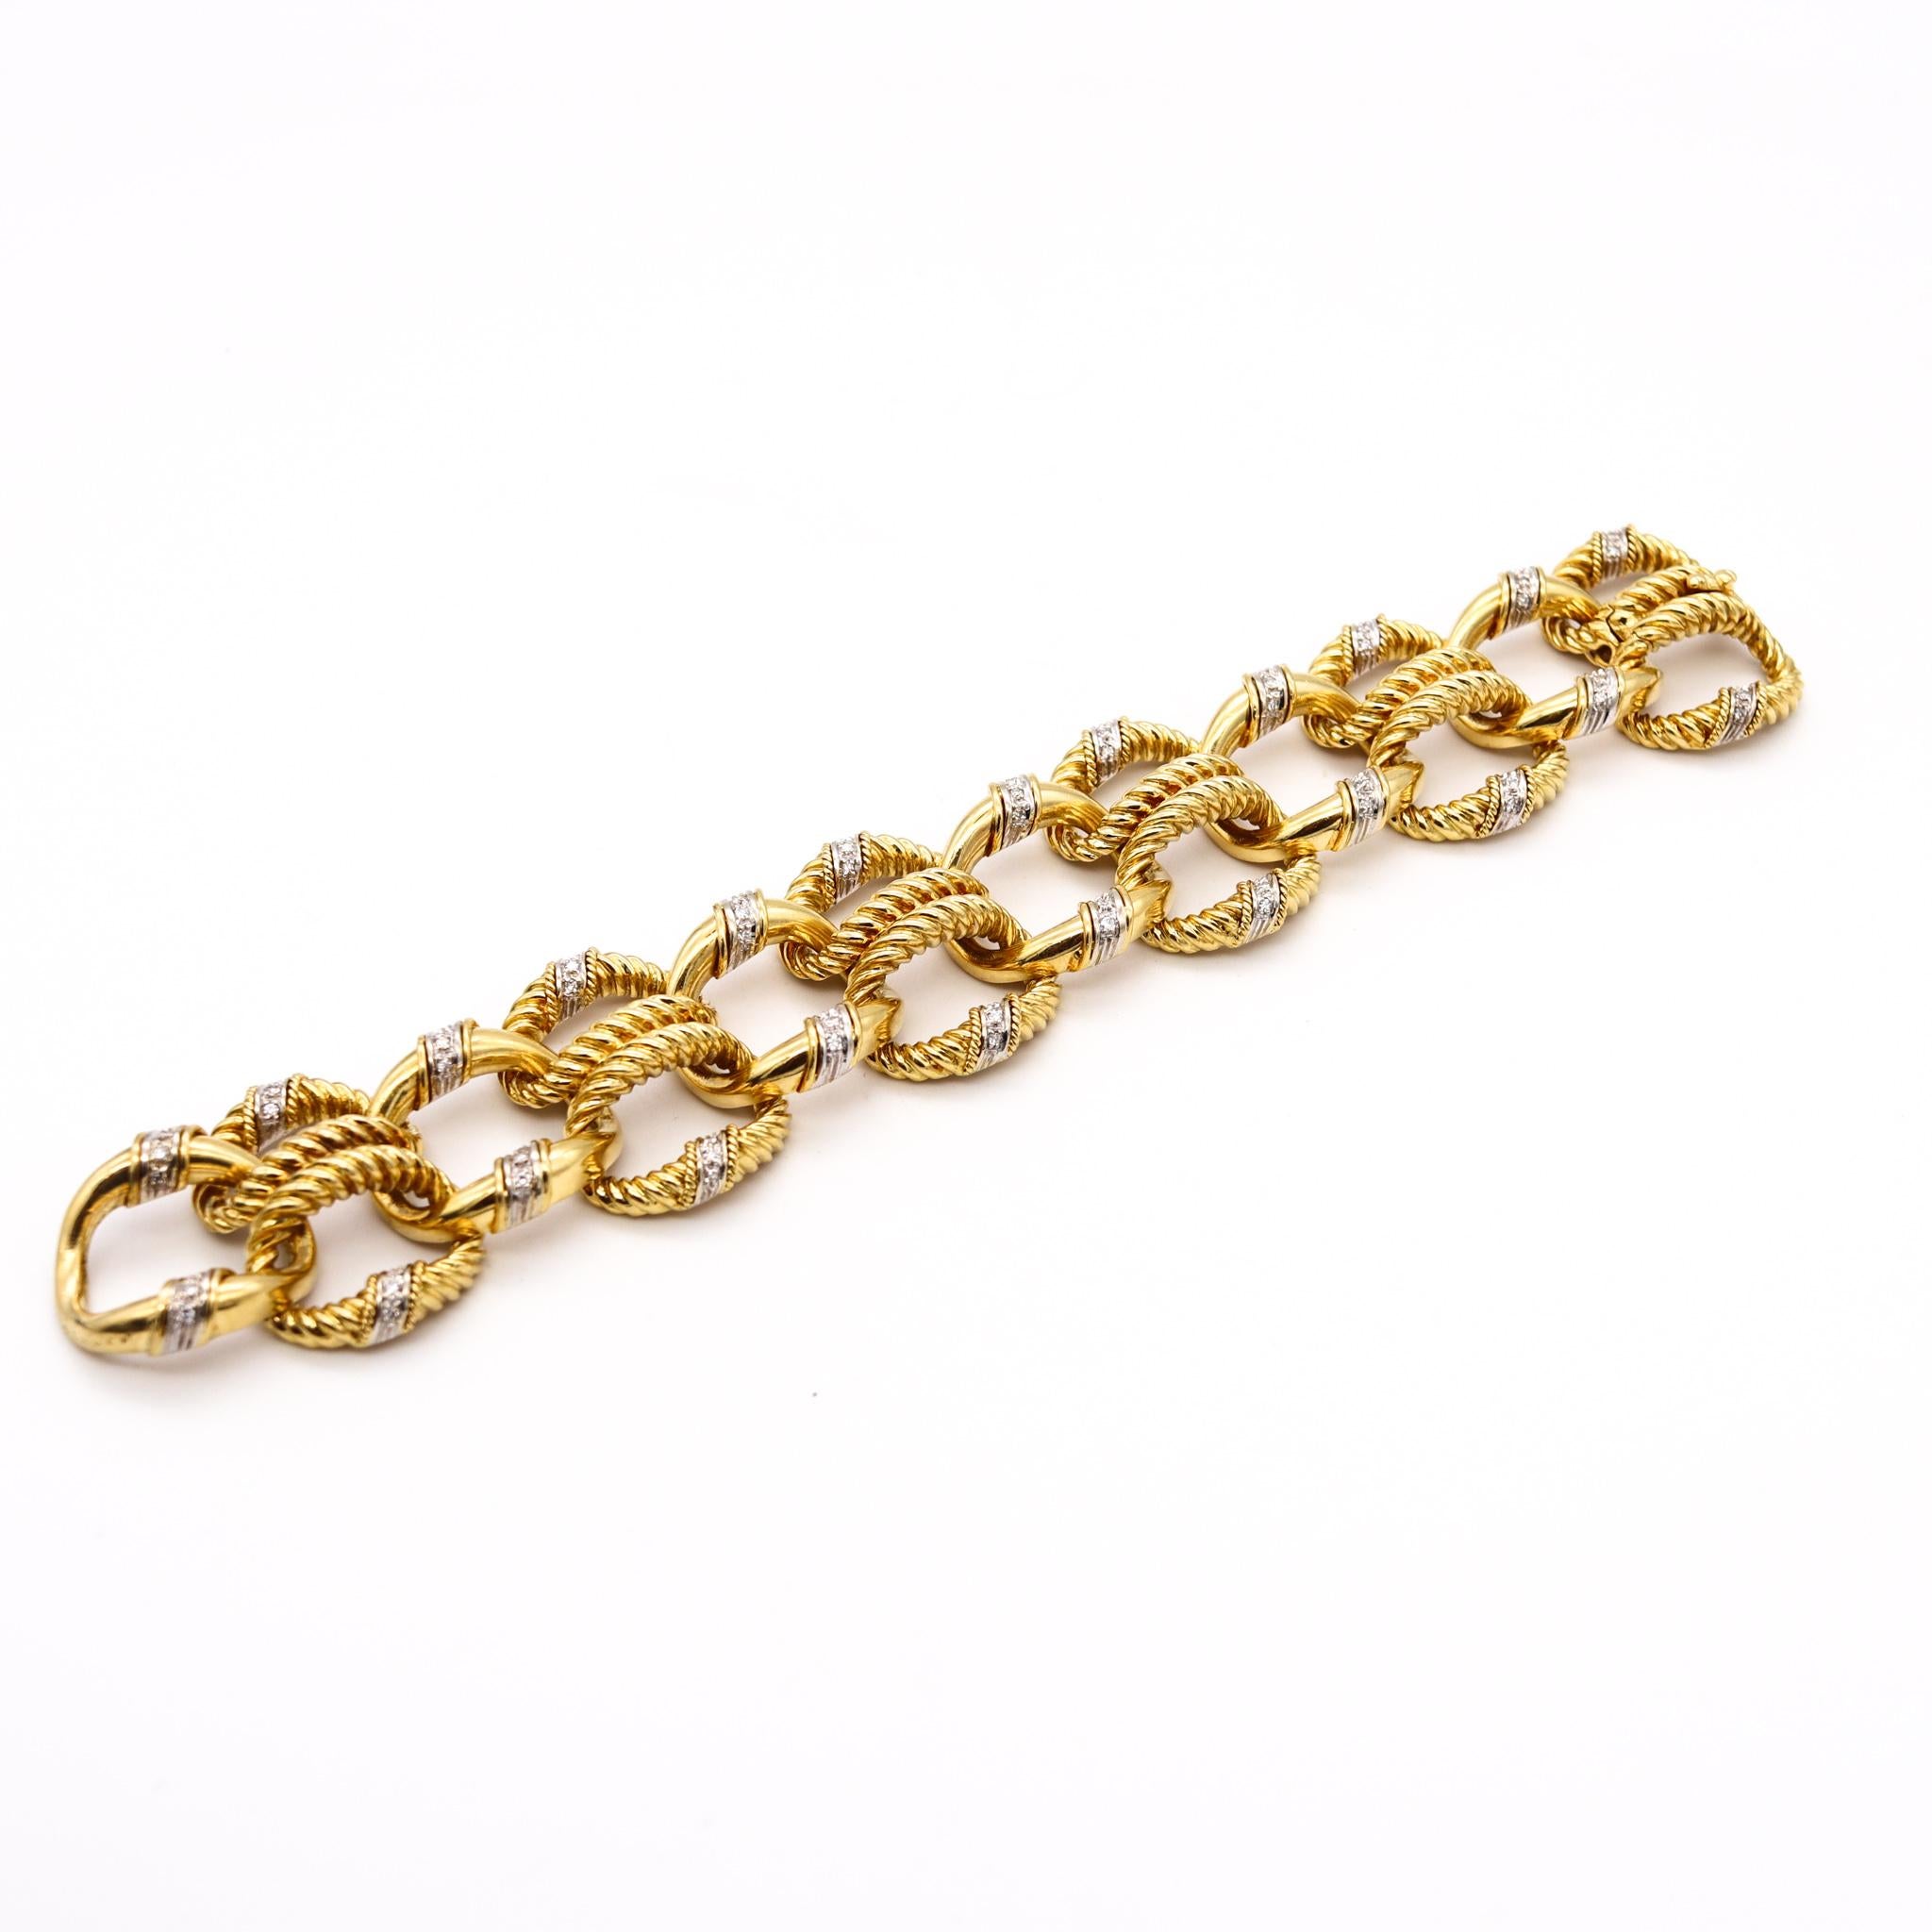 Modernist Van Cleef & Arpels 1960 NY Rope Links Bracelet 18 Kt Gold with 1.78 Ctw Diamonds